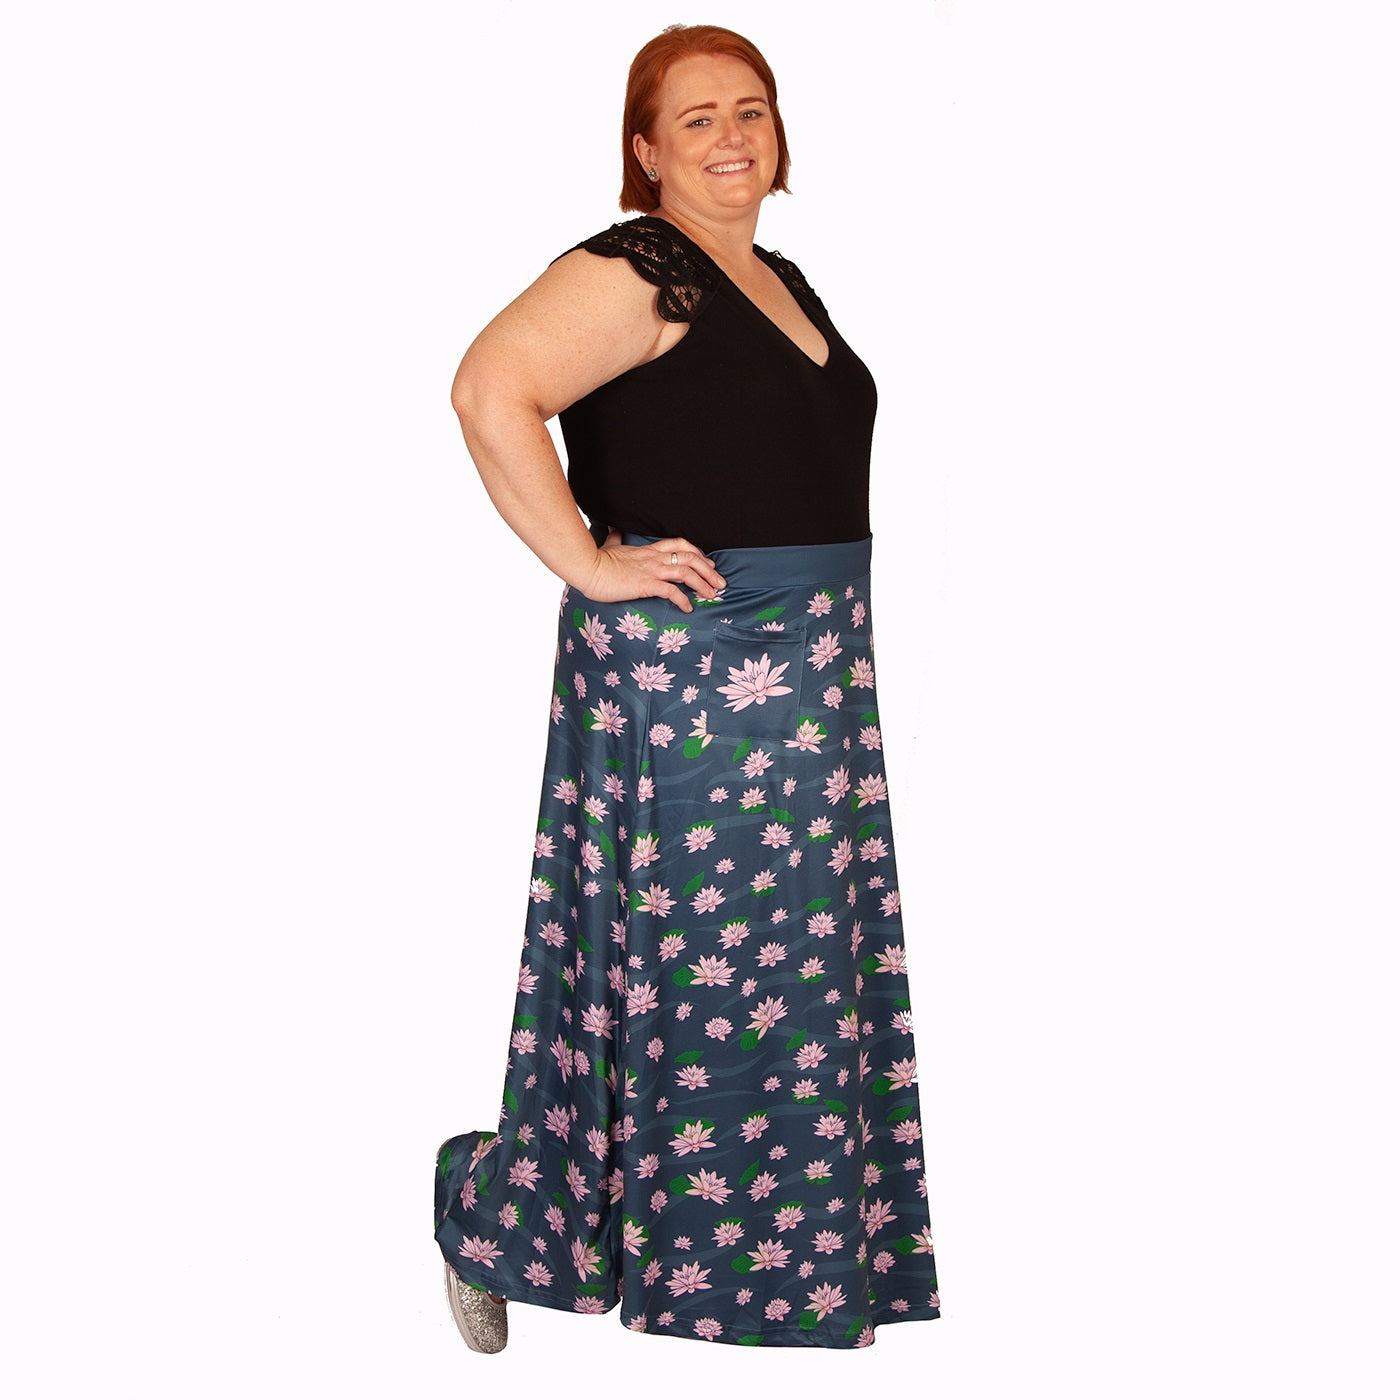 Serene Maxi Skirt by RainbowsAndFairies.com.au (Lotus Flower - Meditation - Yoga - Floral - Skirt With Pockets - Boho - Mod Retro - Vintage Inspired) - SKU: CL_MAXIS_SEREN_ORG - Pic-06